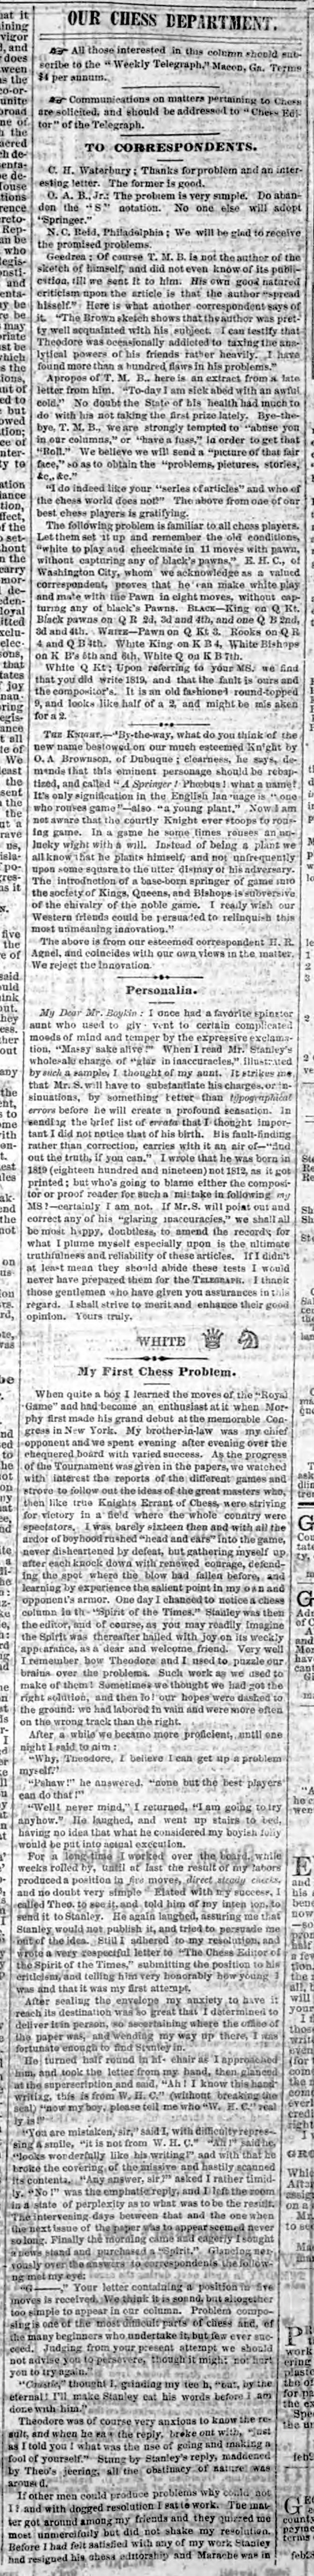 1867.03.08-01 Macon Georgia Weekly Telegraph.jpg